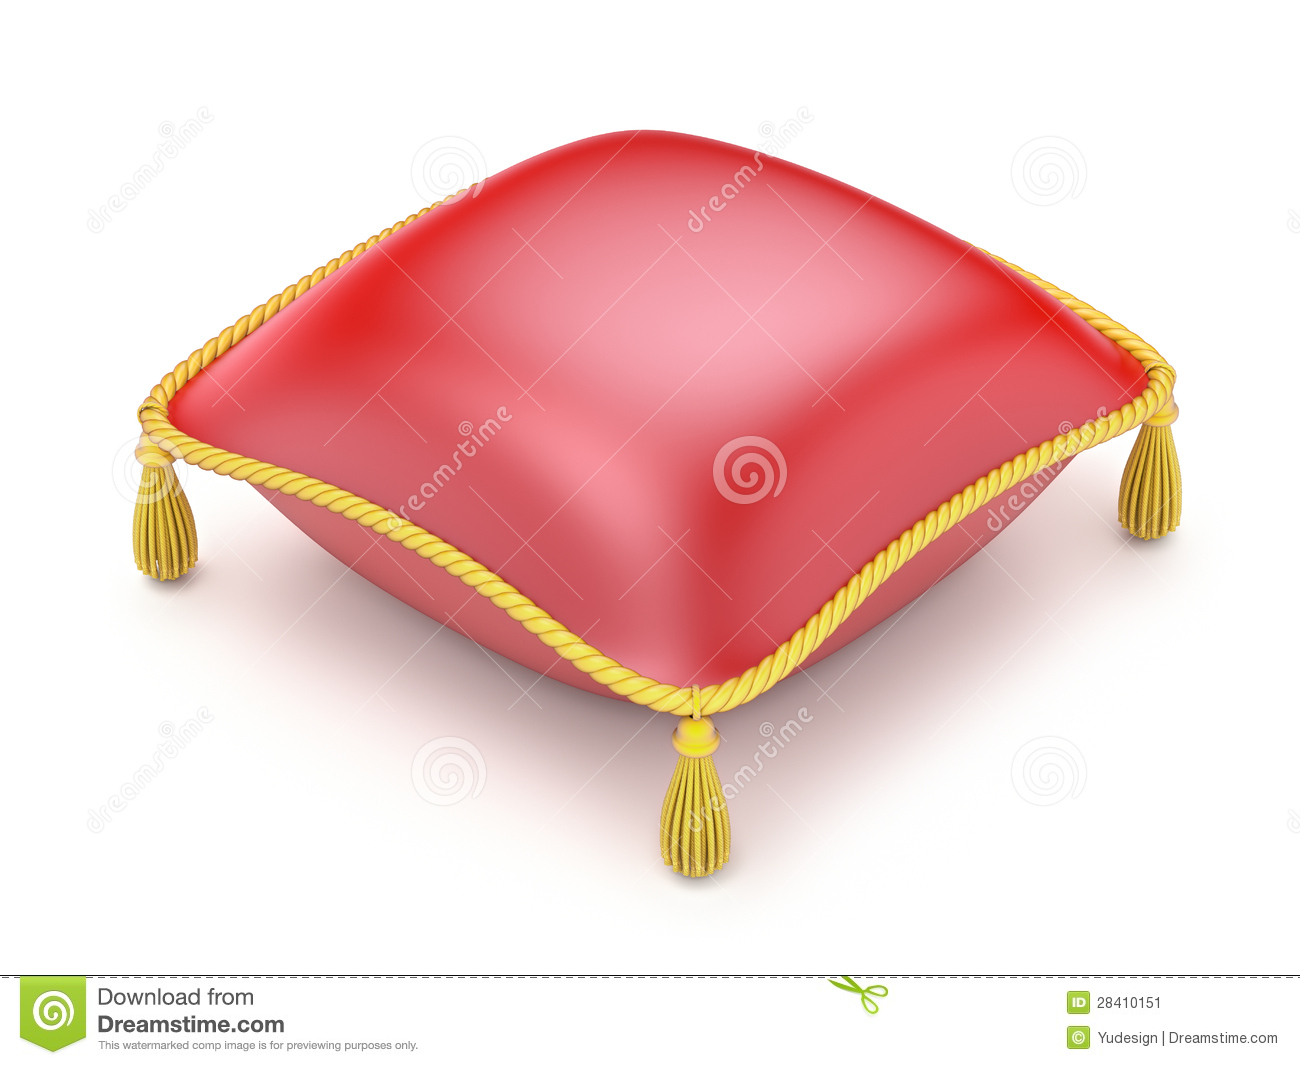 Red Pillow Over White Background   3d Illustration